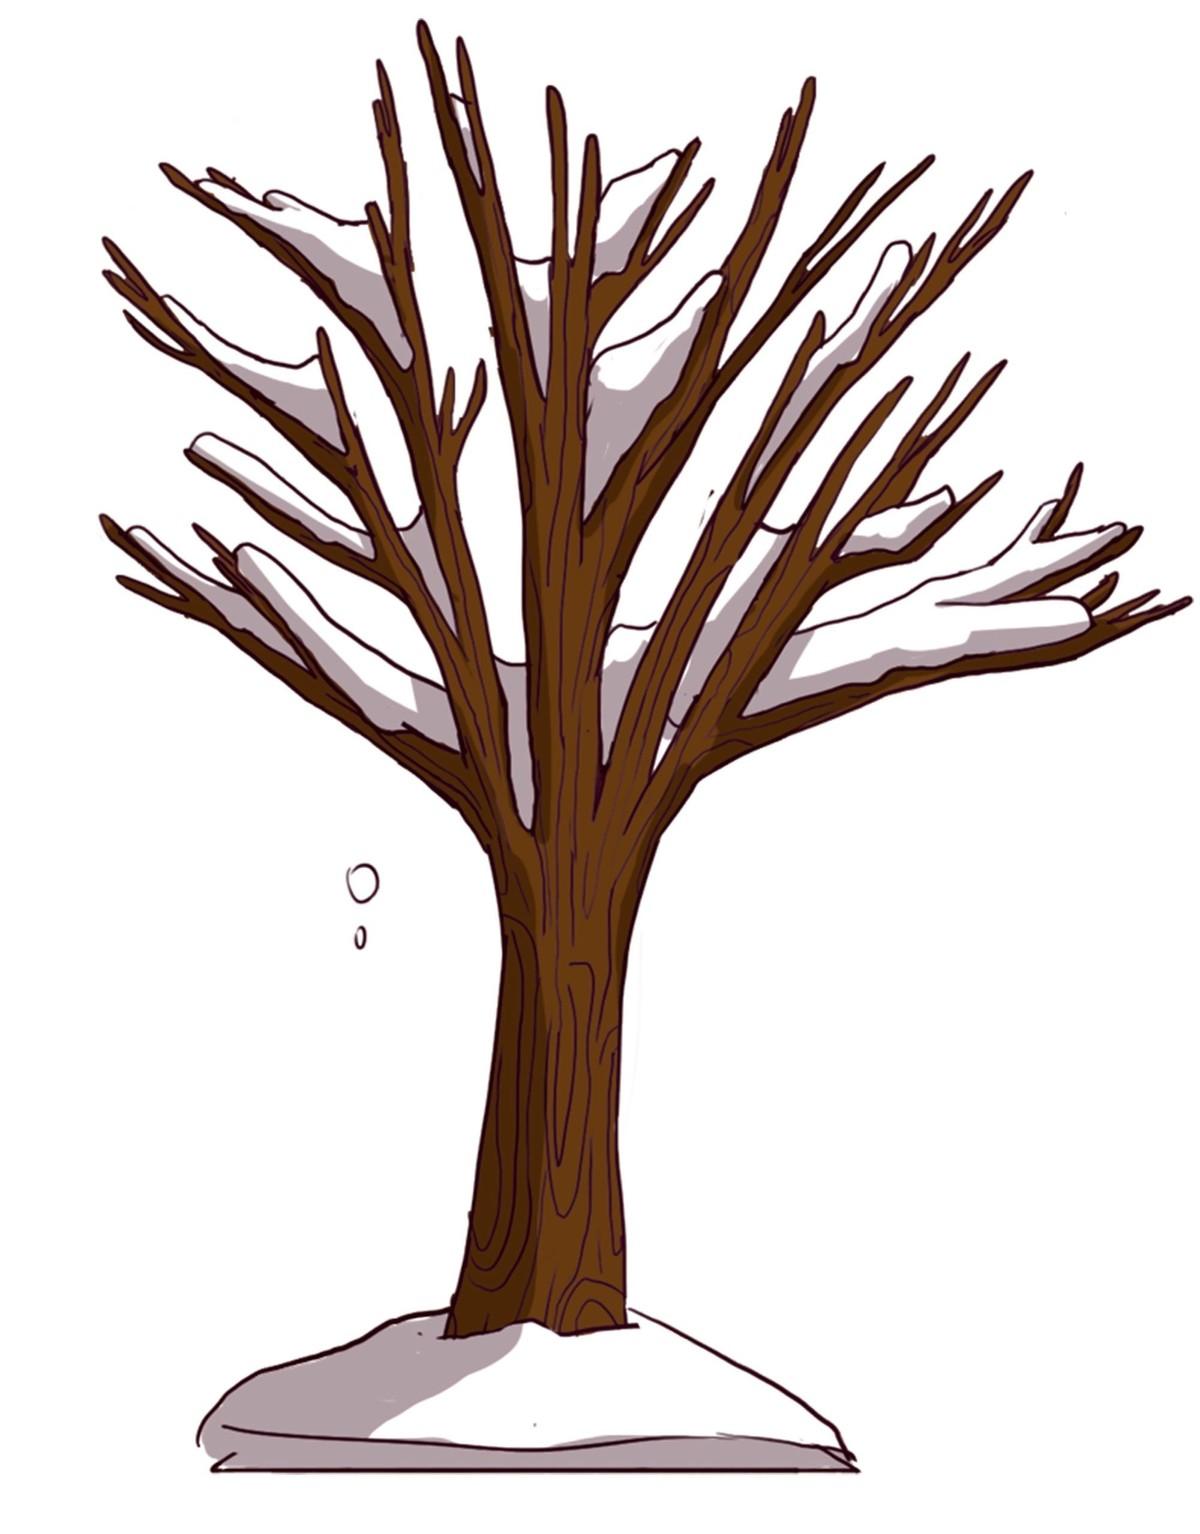 A leafless, snowy tree